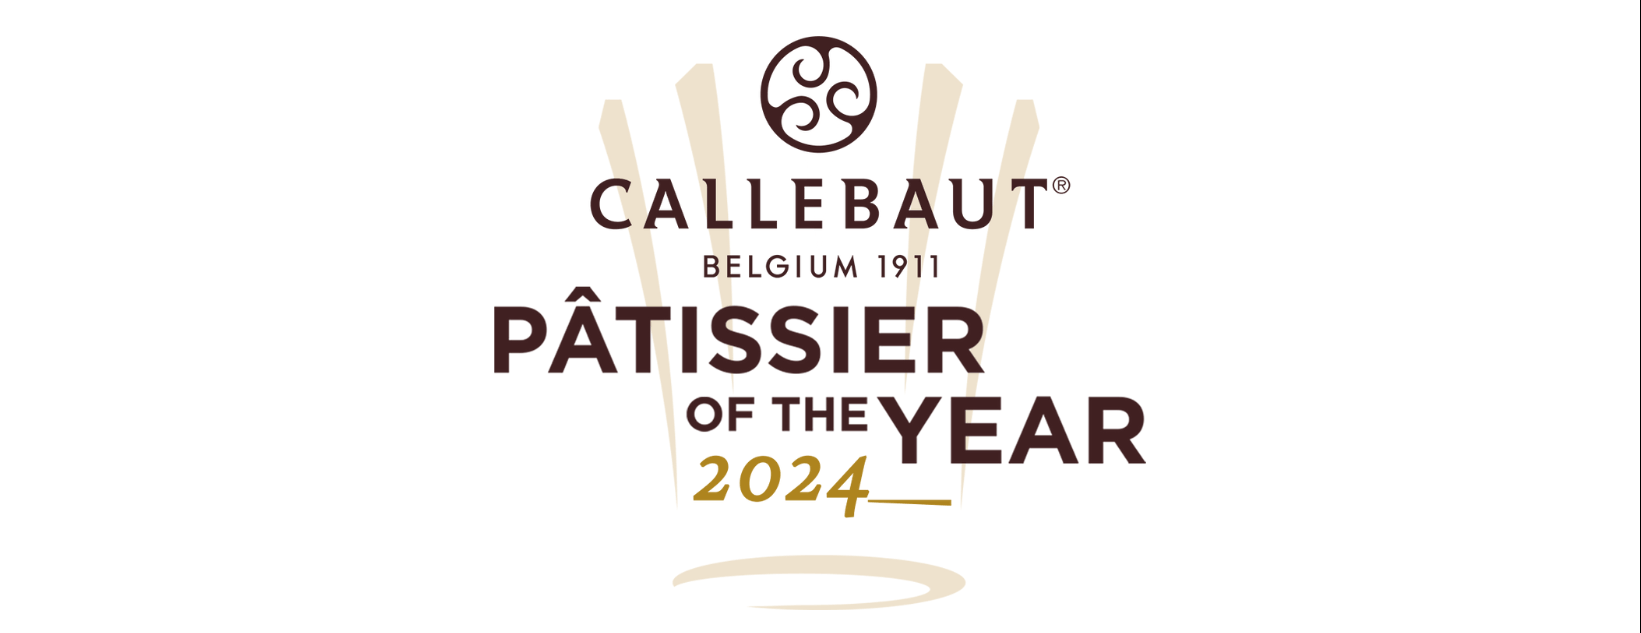 Callebaut Patissier of the Year 2024